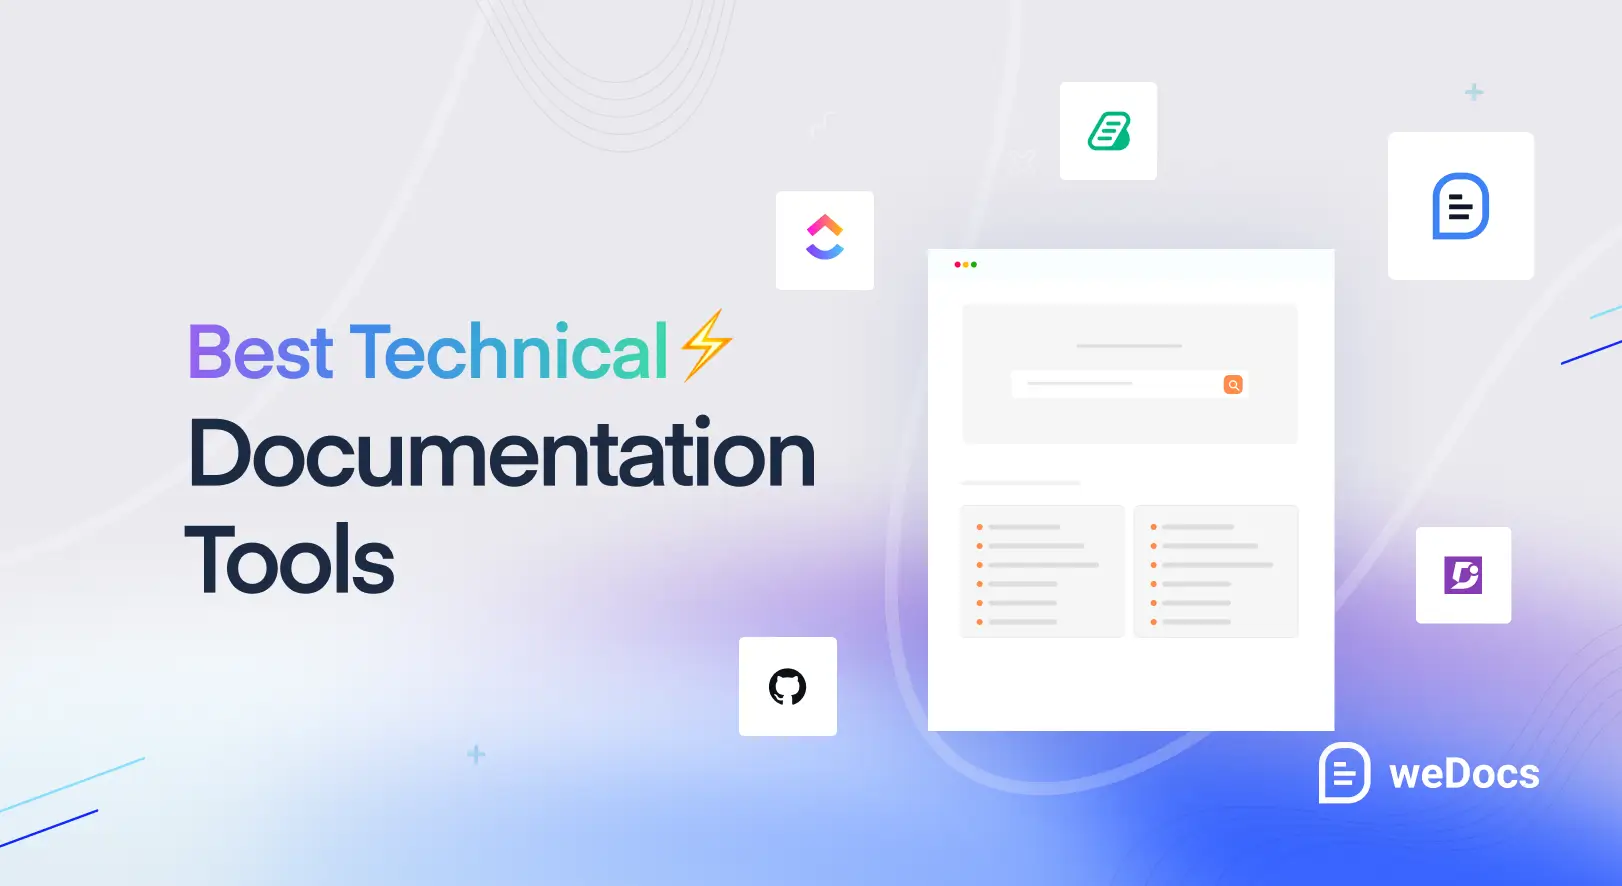 Best Technical Documentation Tools